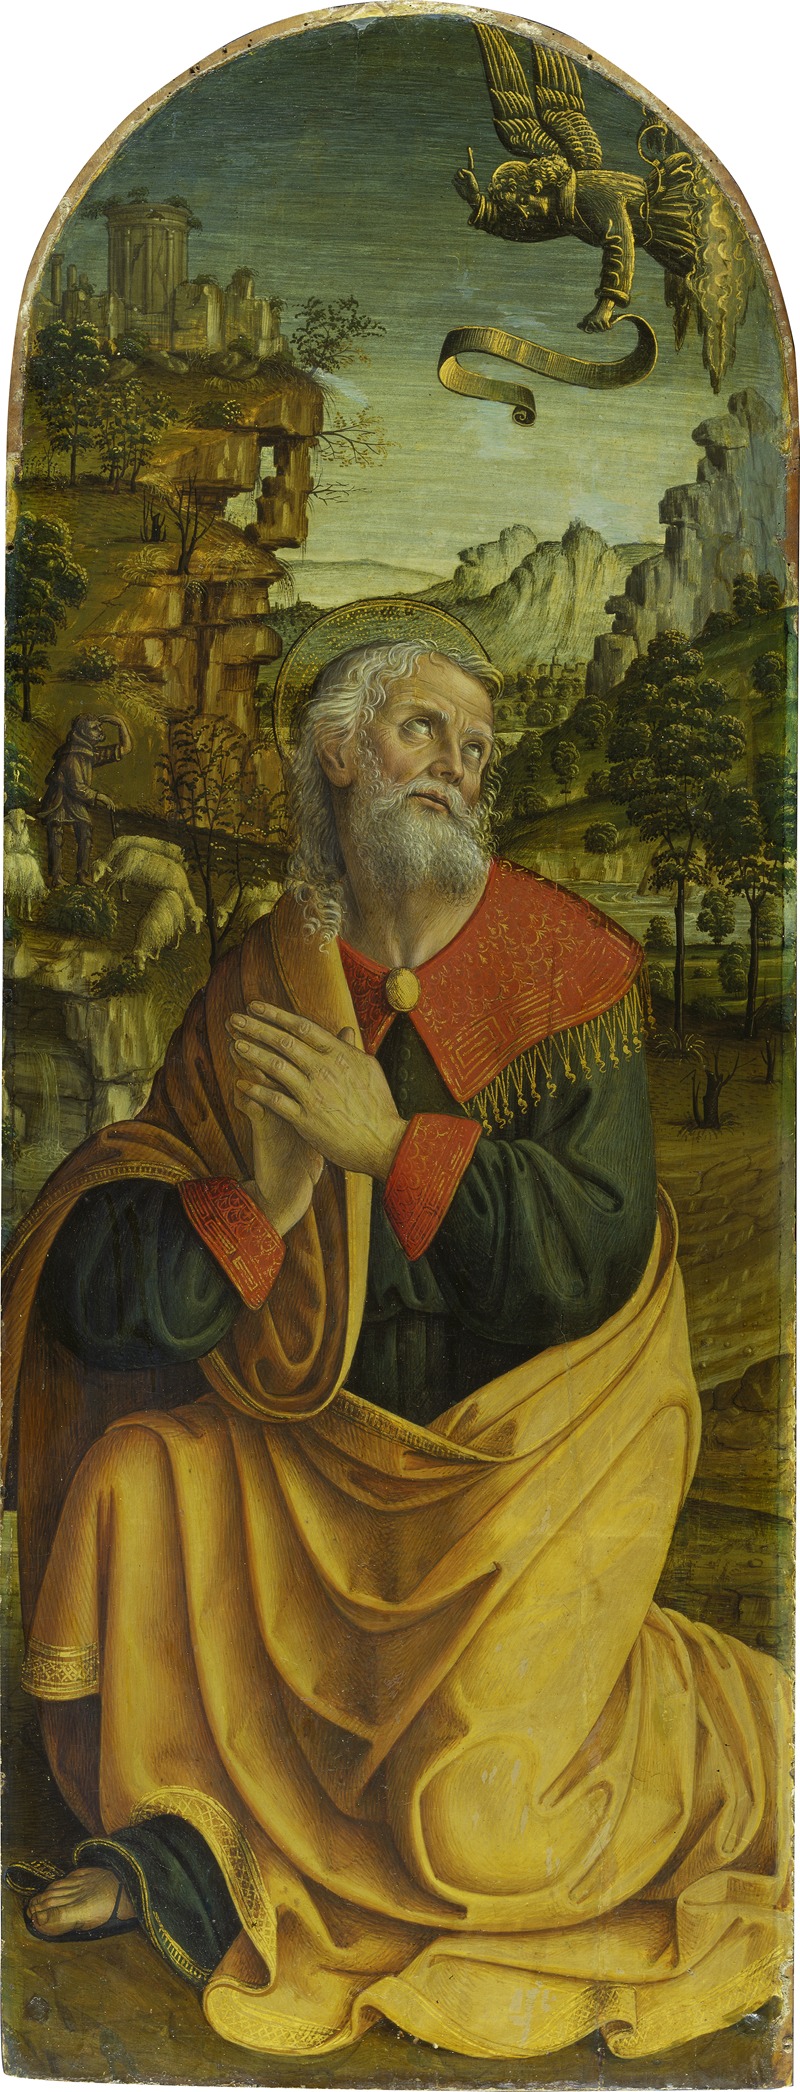 Macrino D'alba - The Annuciation to St Joachim